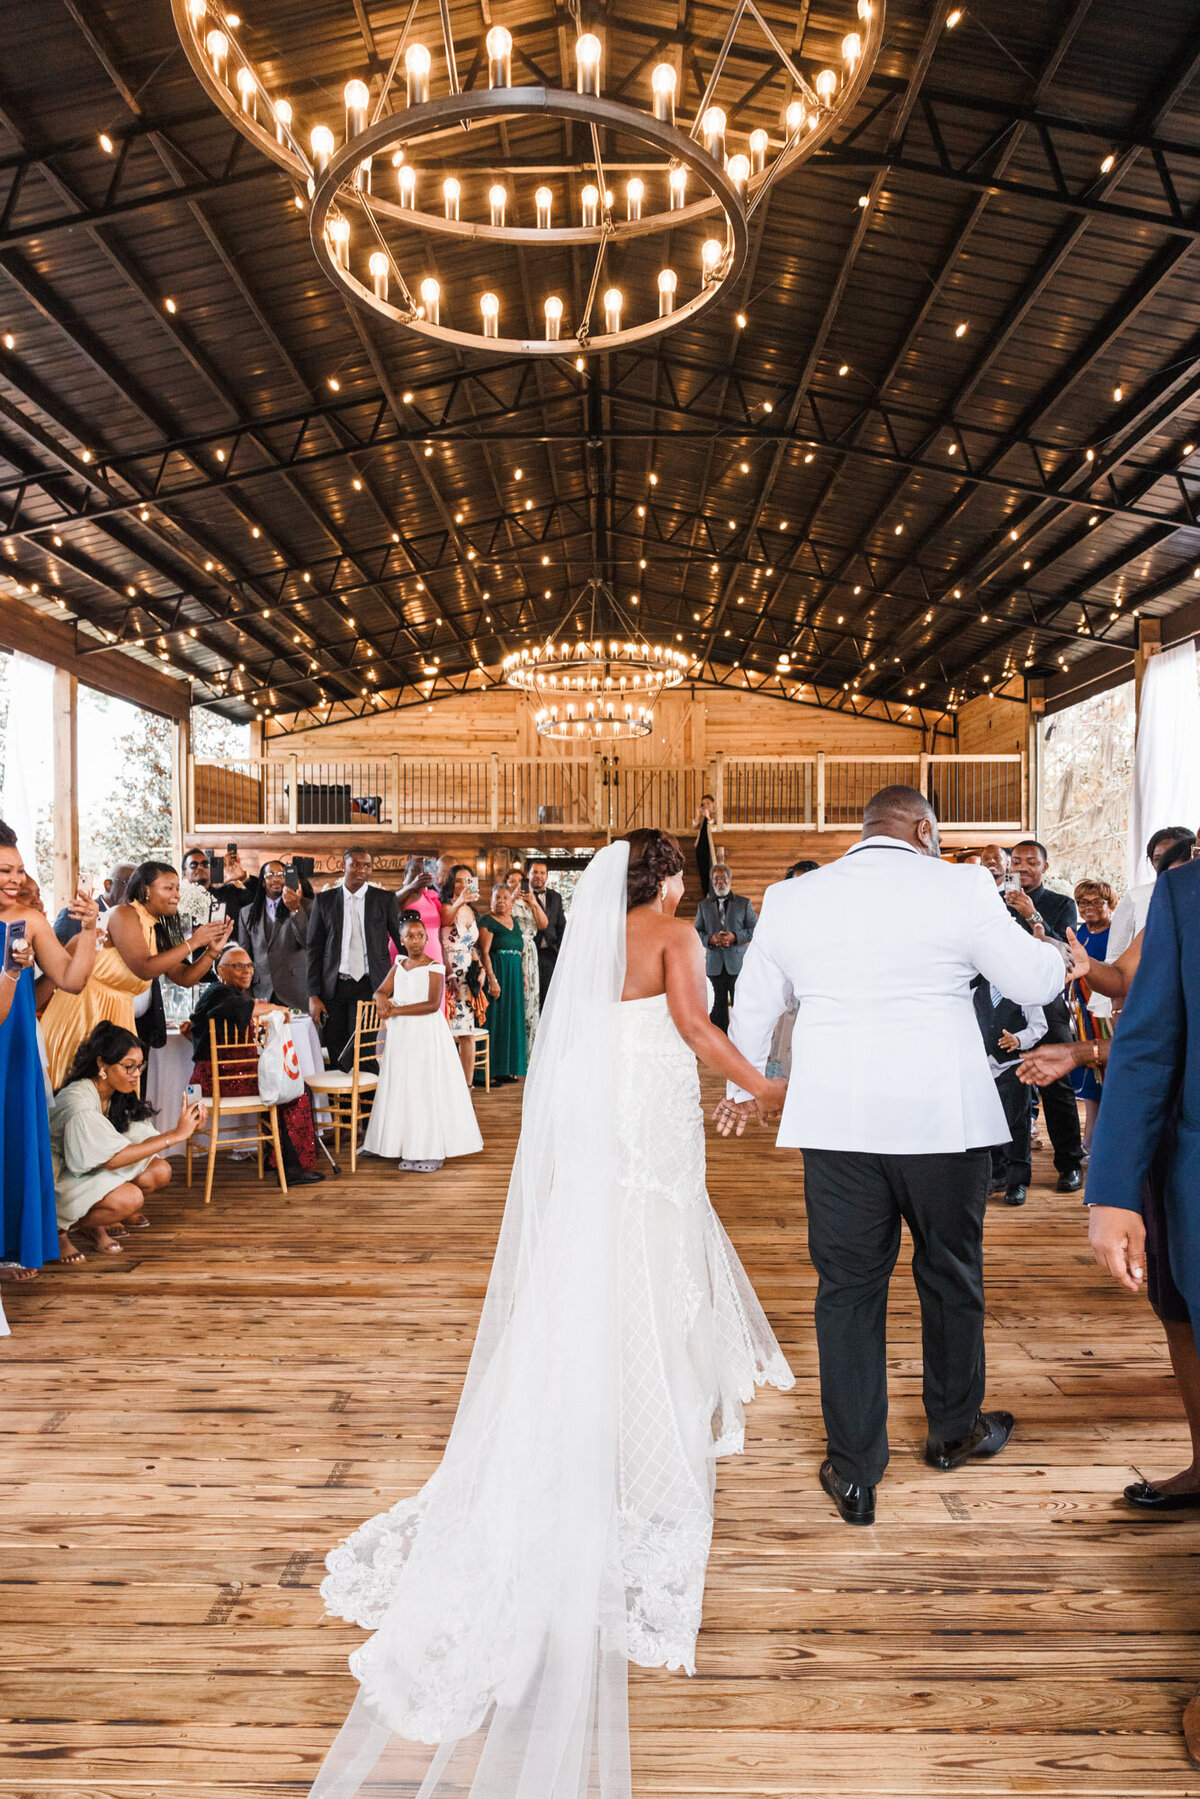 Michael and Mishka-Wedding-Green Cabin Ranch-Astatula, FL-FL Wedding Photographer-Orlando Photographer-Emily Pillon Photography-S-120423-325